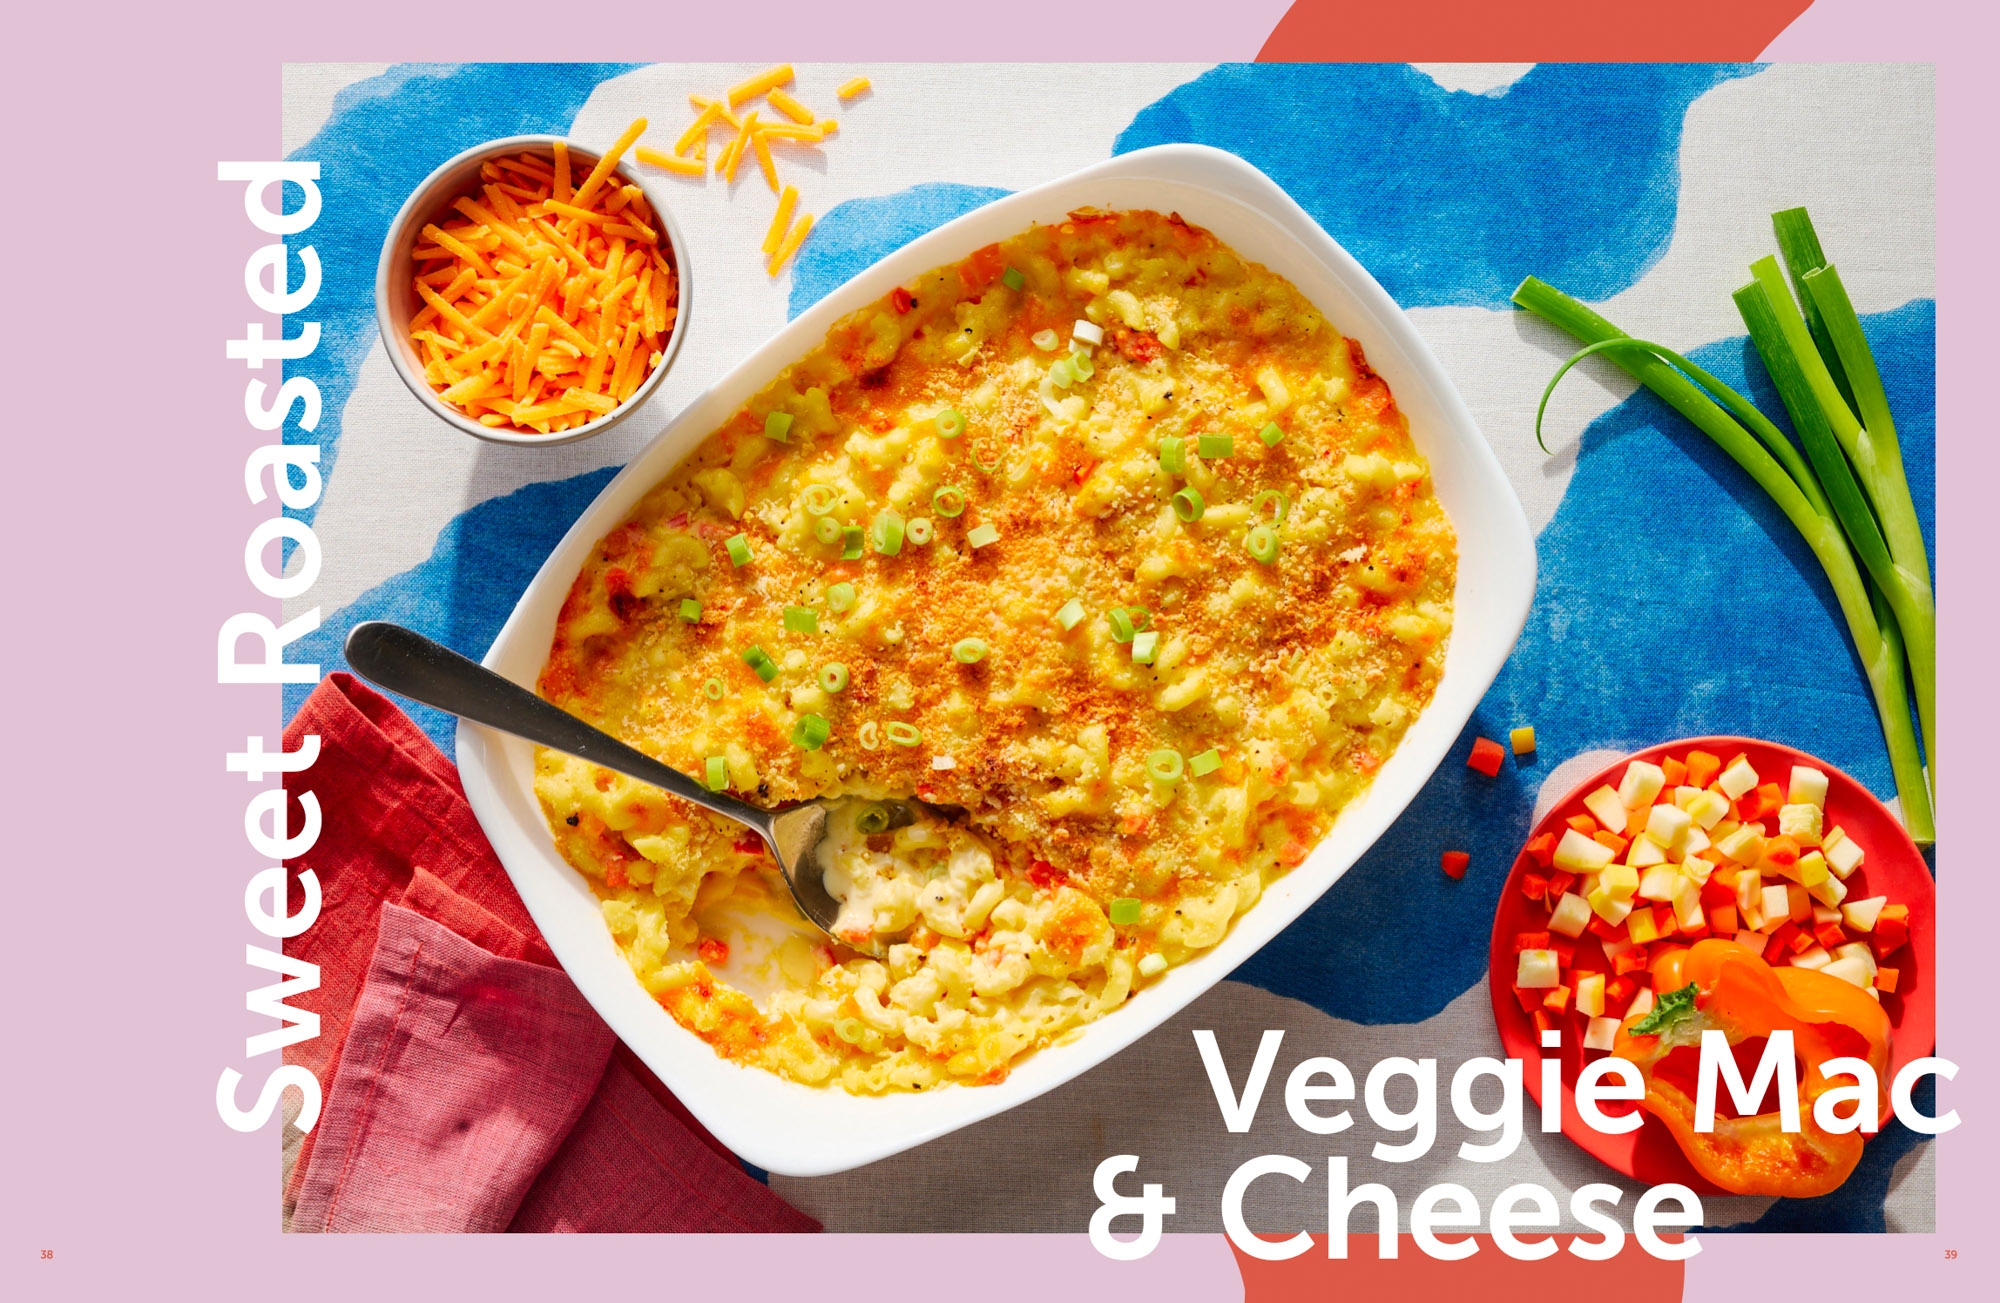 Veggie Mac and cheese Johanna Brannan Lowe Food and Prop Stylist | recipe developer New York